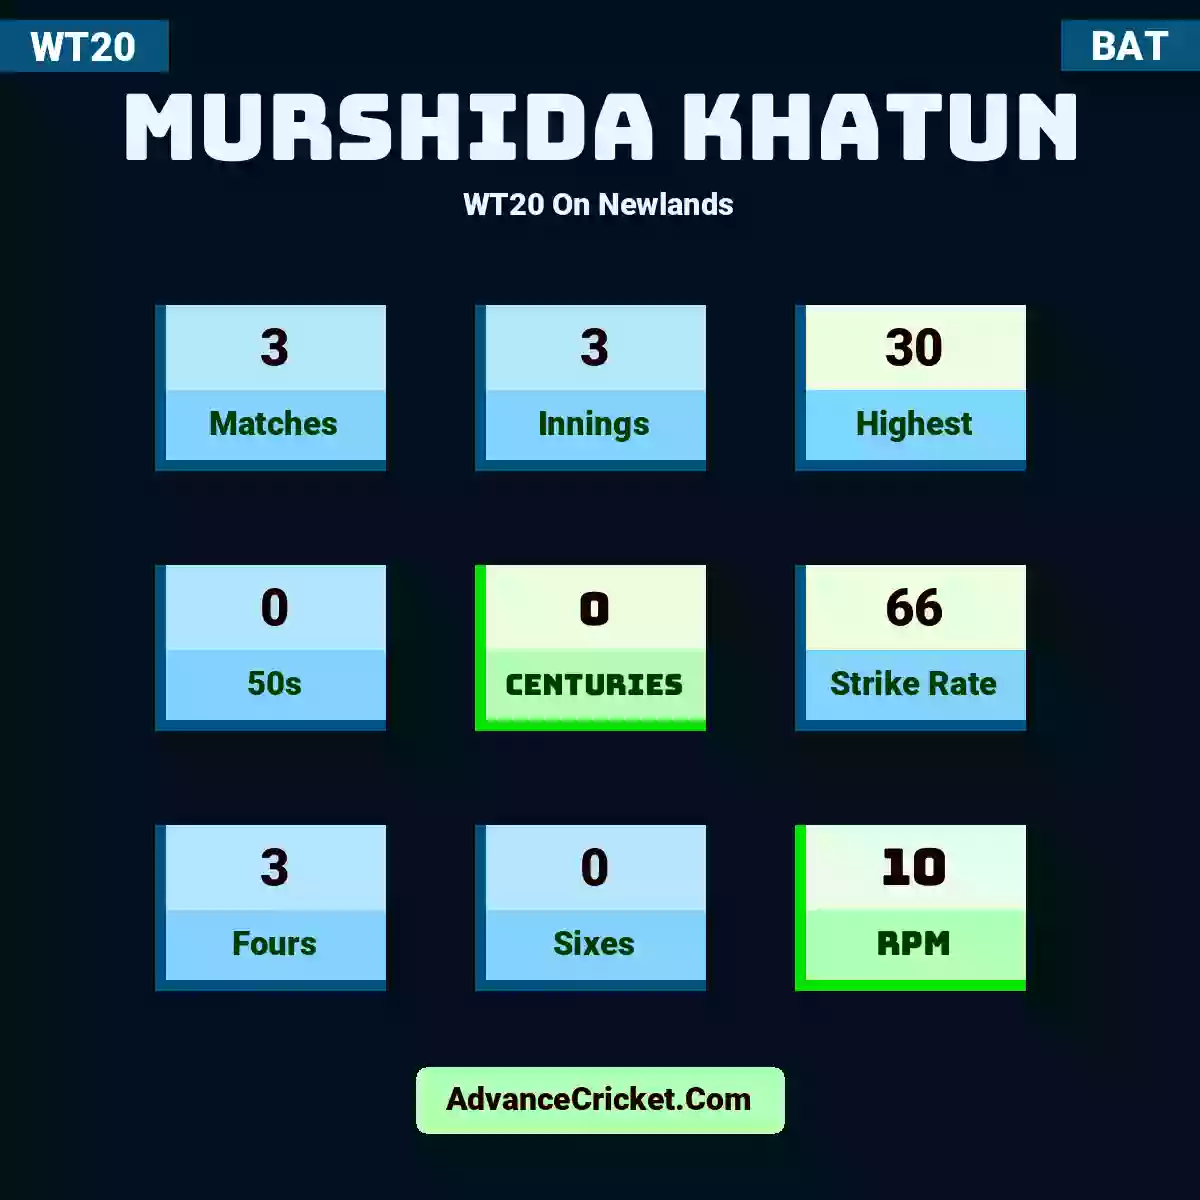 Murshida Khatun WT20  On Newlands, Murshida Khatun played 3 matches, scored 30 runs as highest, 0 half-centuries, and 0 centuries, with a strike rate of 66. M.Khatun hit 3 fours and 0 sixes, with an RPM of 10.